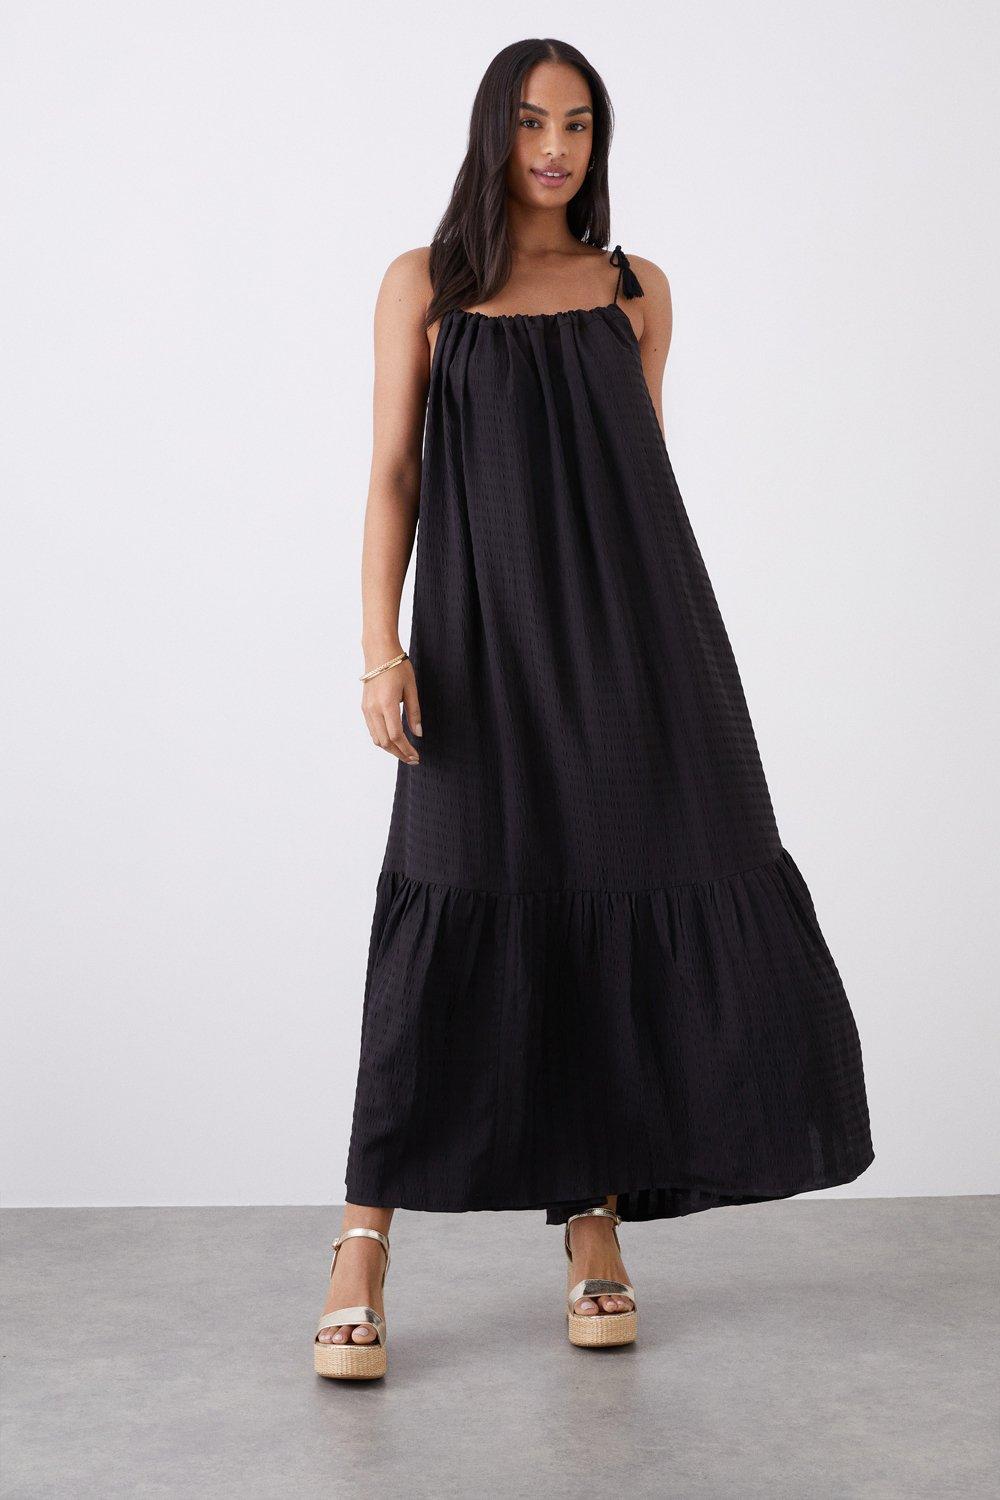 Women’s Maxi Tassel Detail Beach Dress - black - M